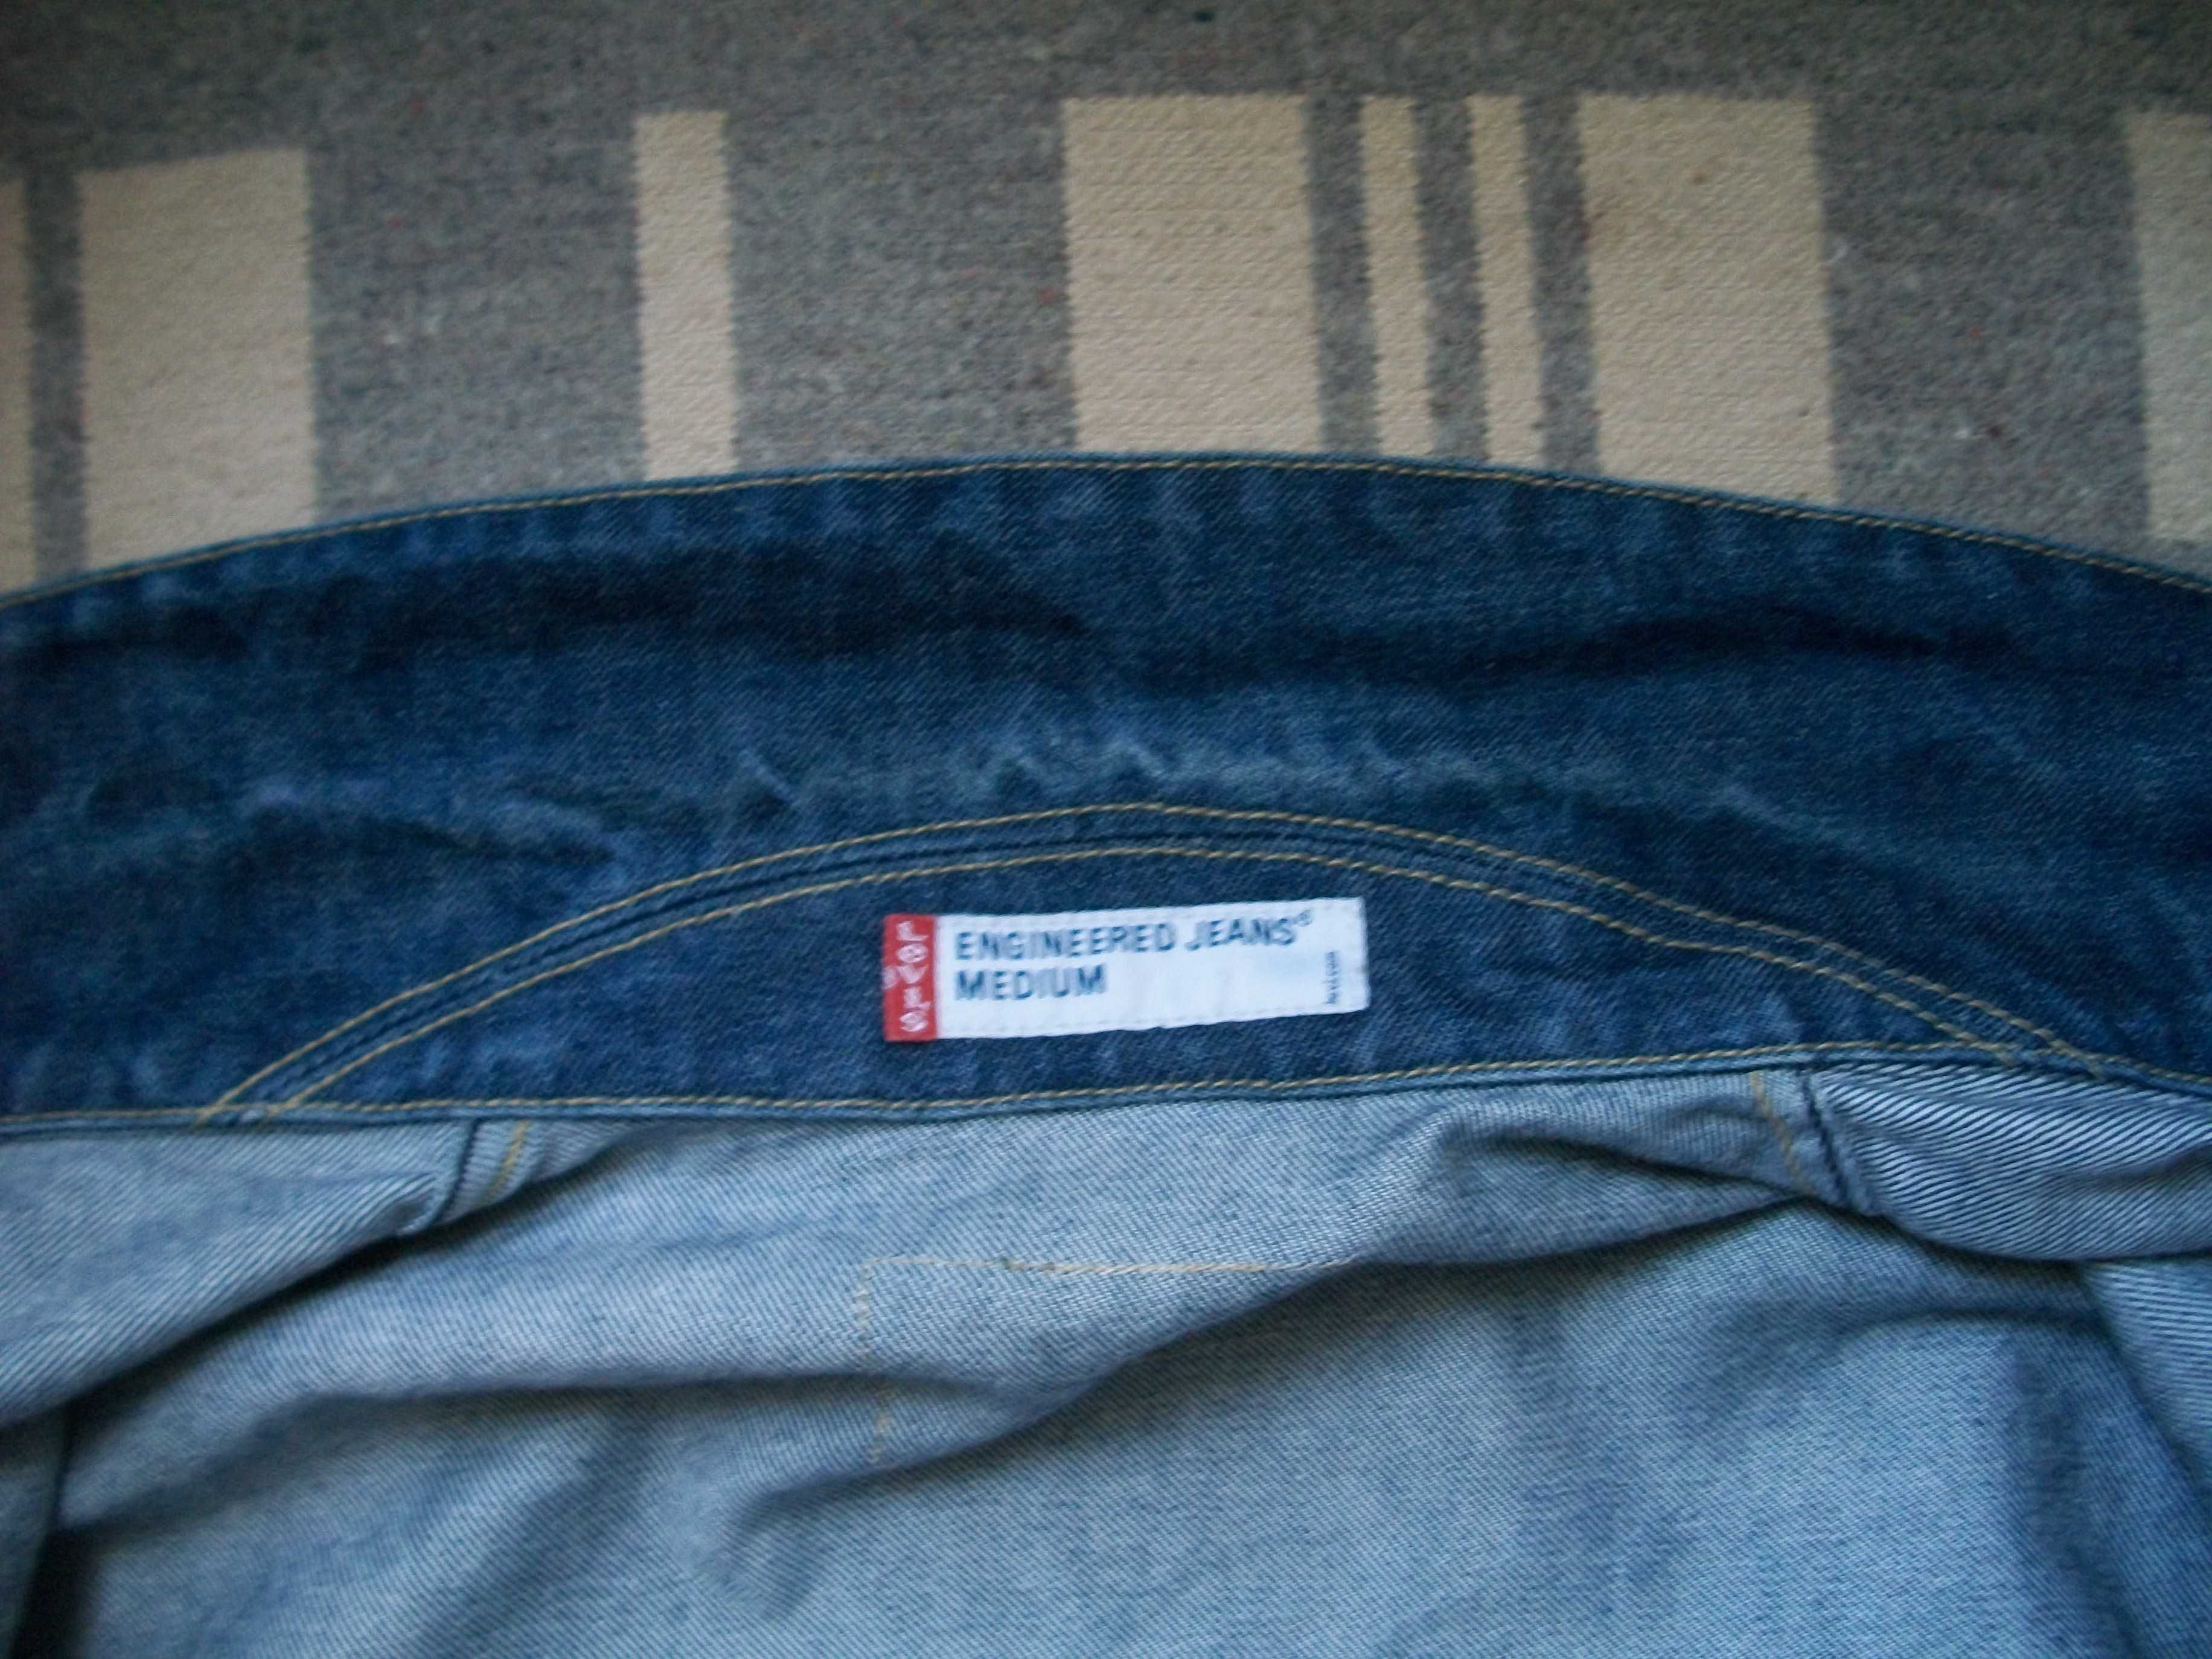 джинсовая куртка Levis Engineered medium плечи 50 см оригинал